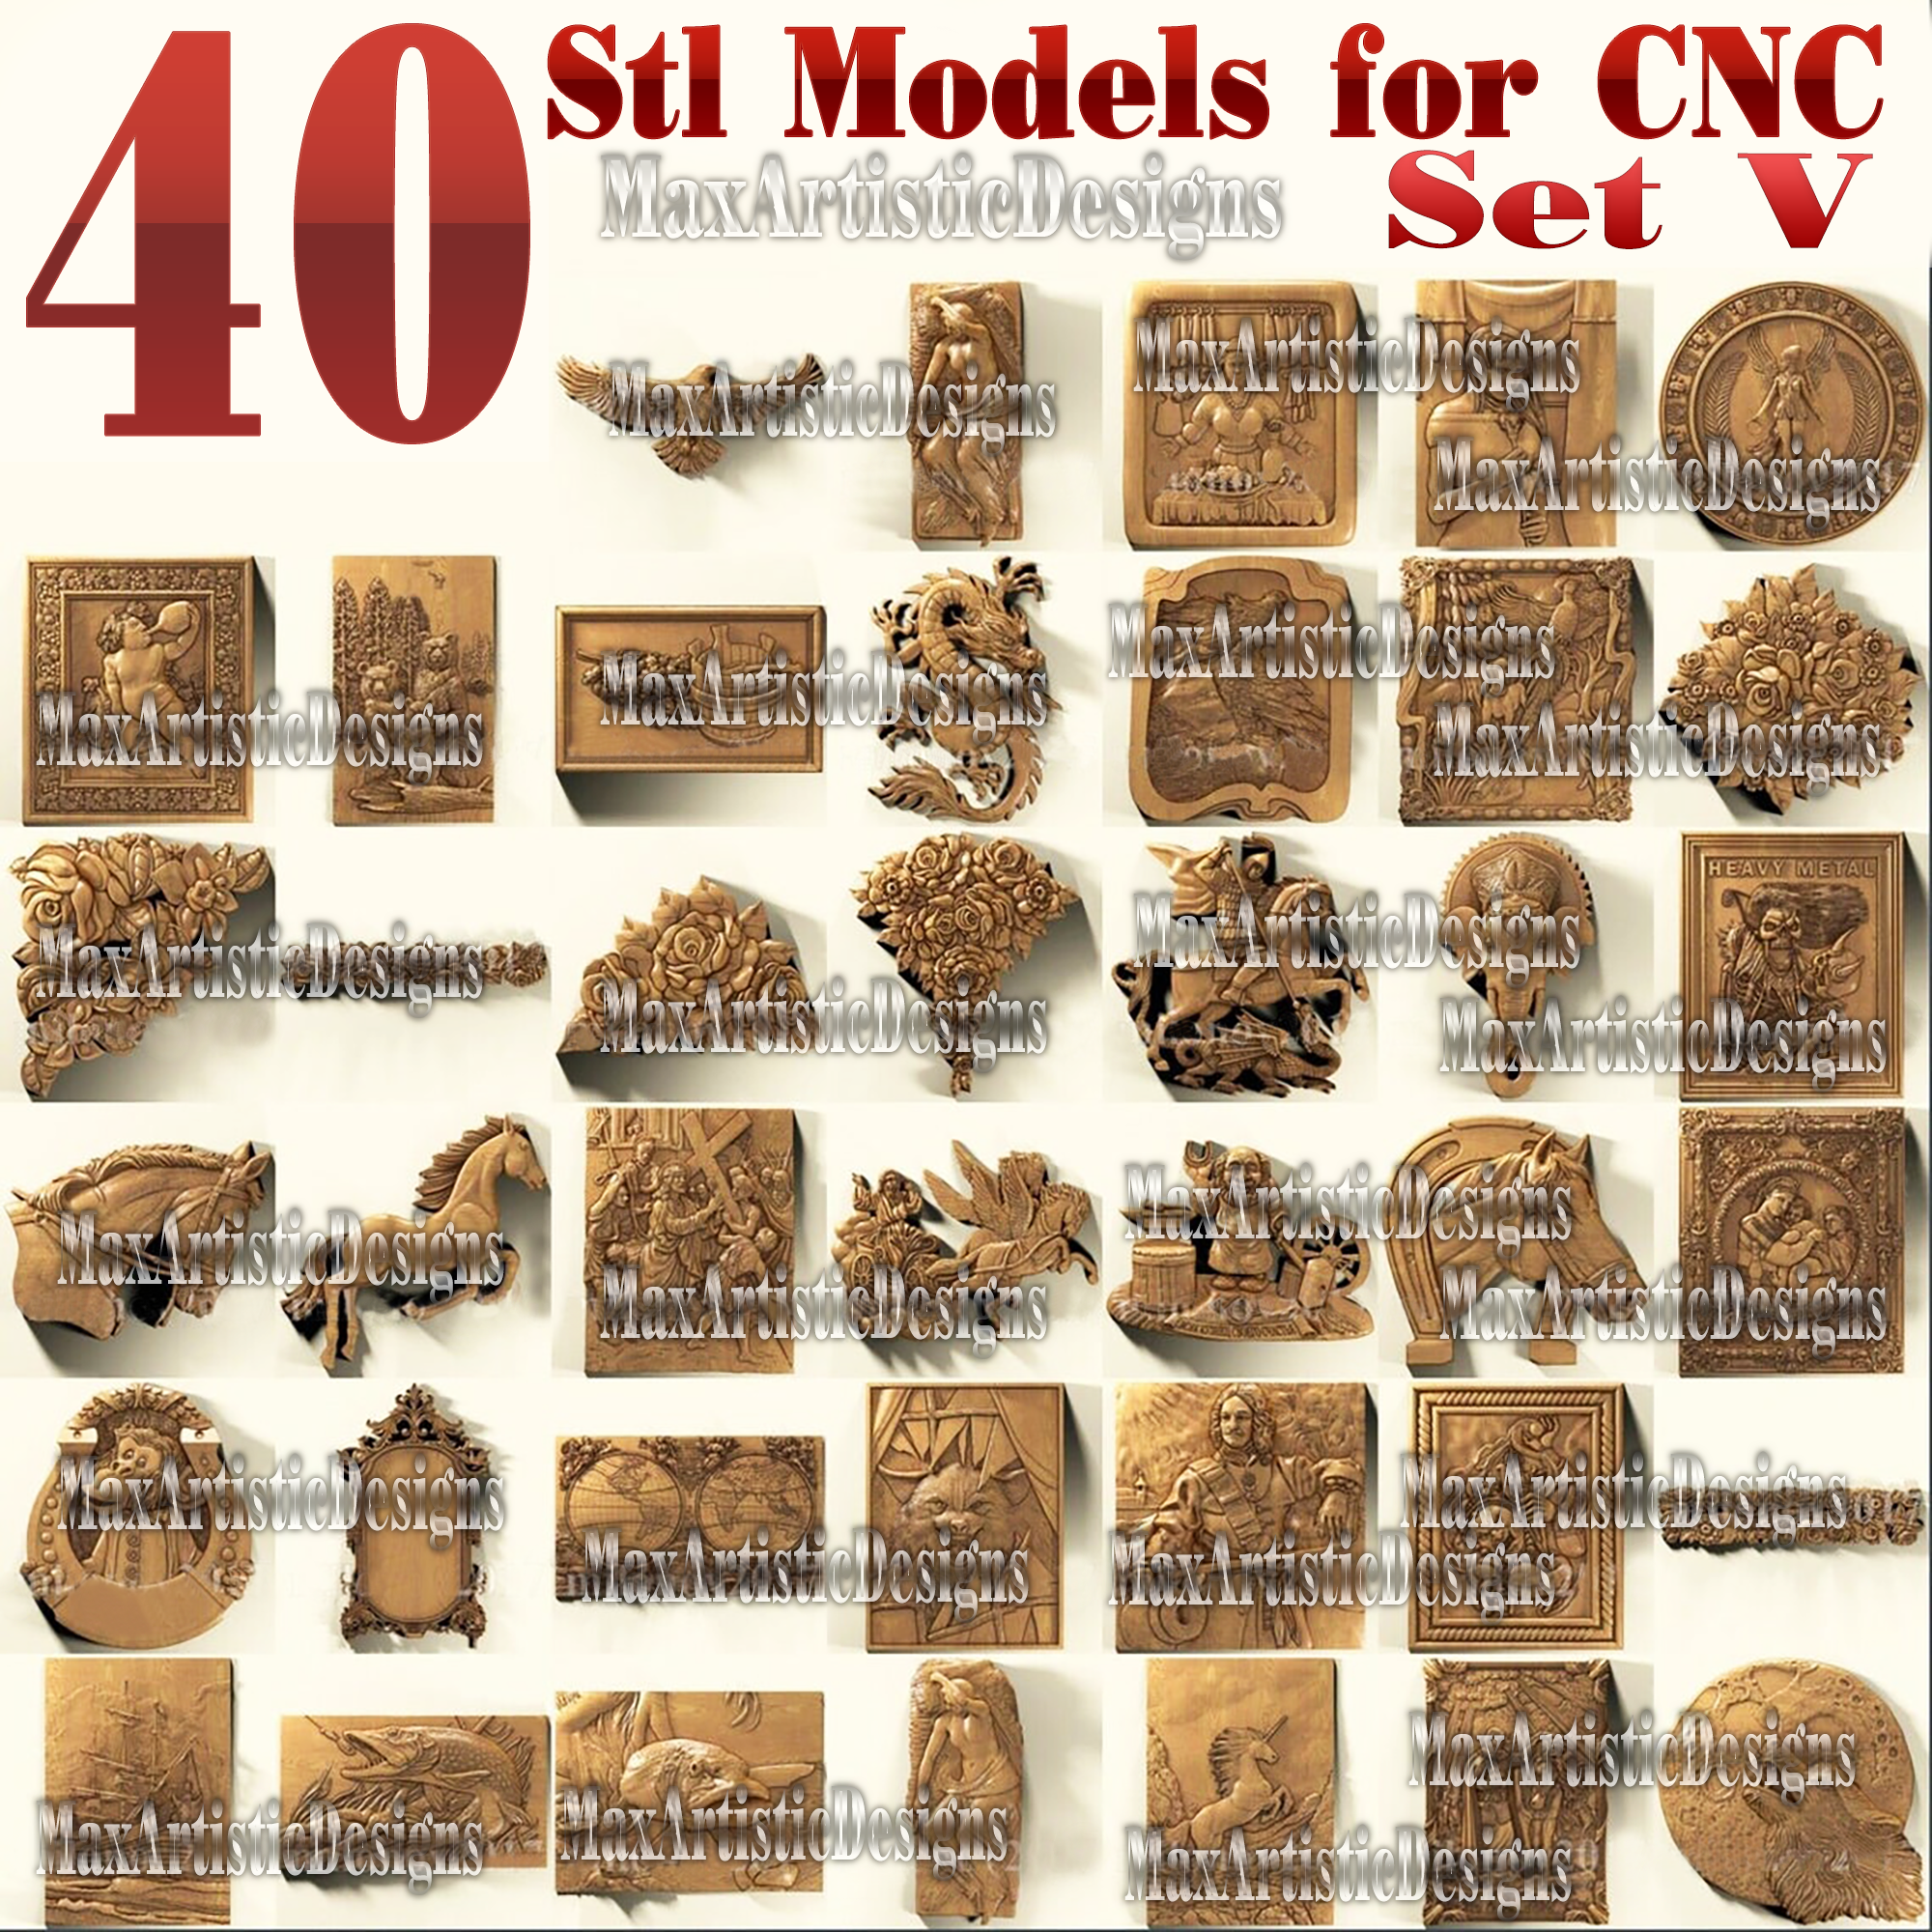 41 pcs 3d stl models basrelief metal work for cnc router artcam aspire set v download